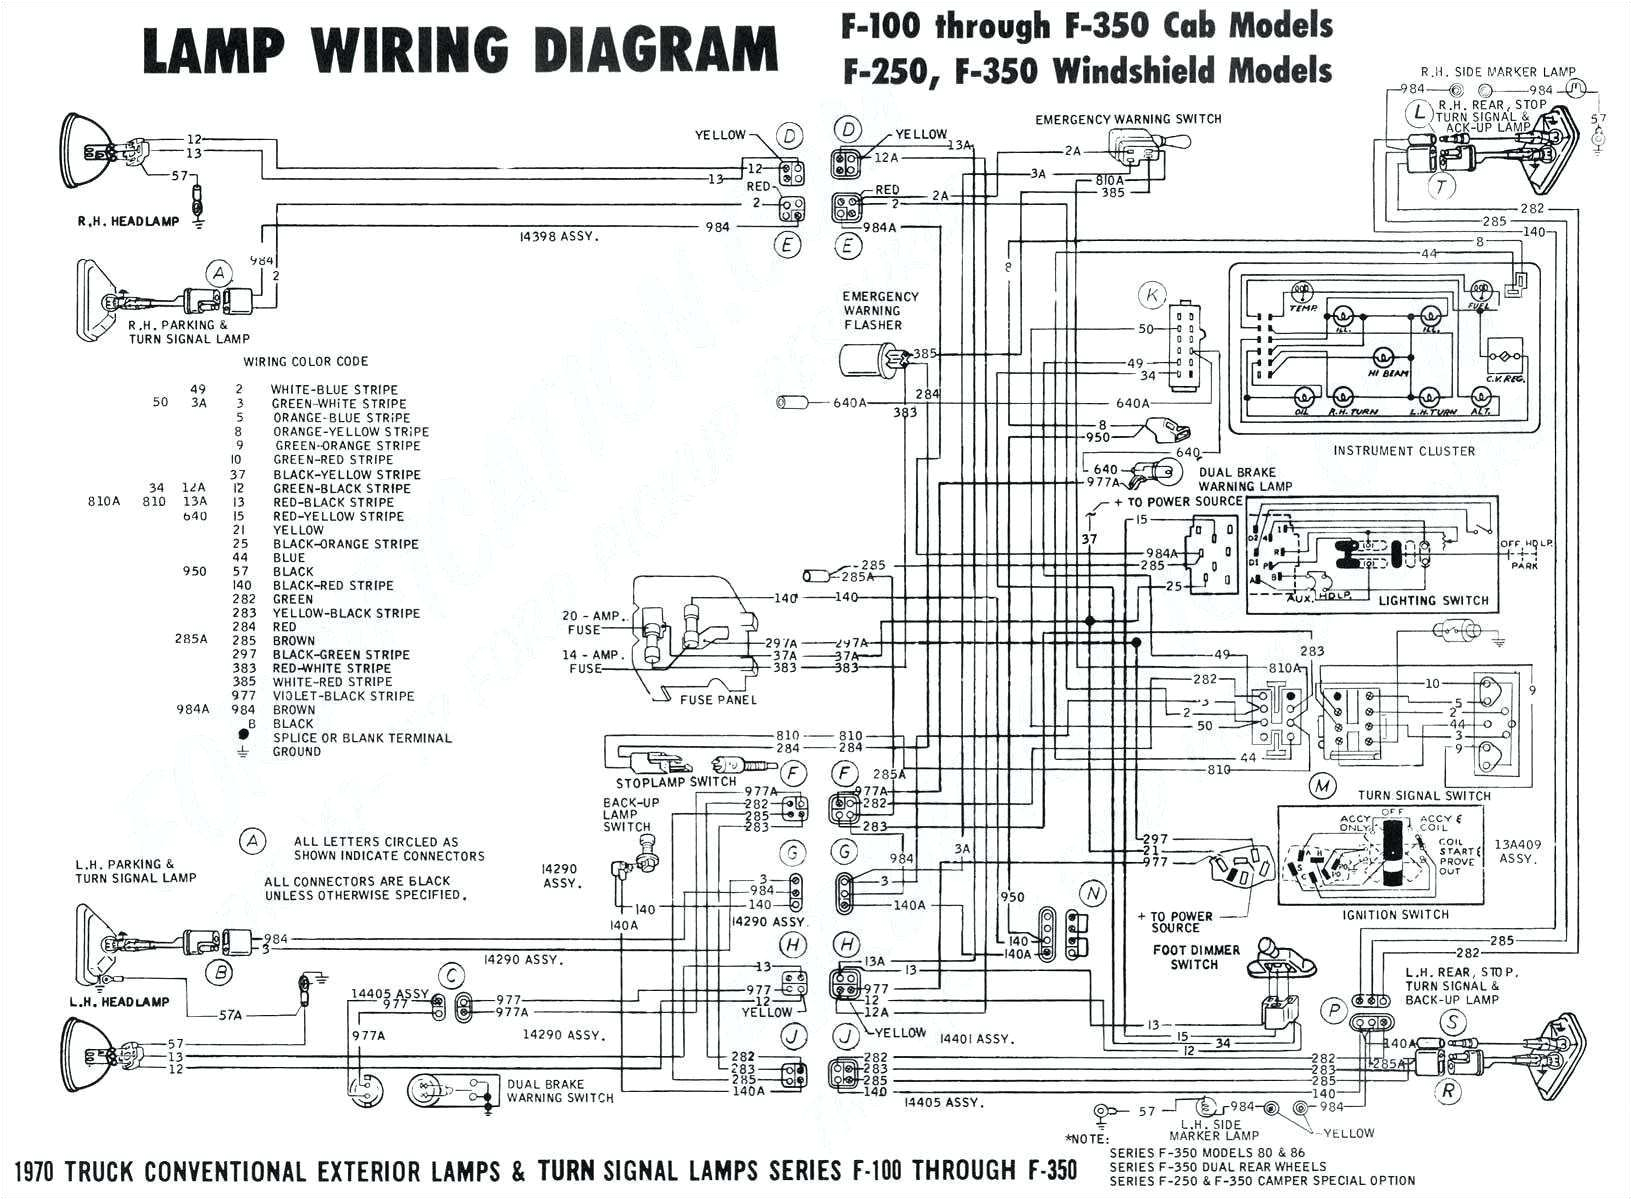 1991 vw cabriolet wiring diagrams wiring diagram guide for dummies 2000 vw cabrio wiring diagram 1989